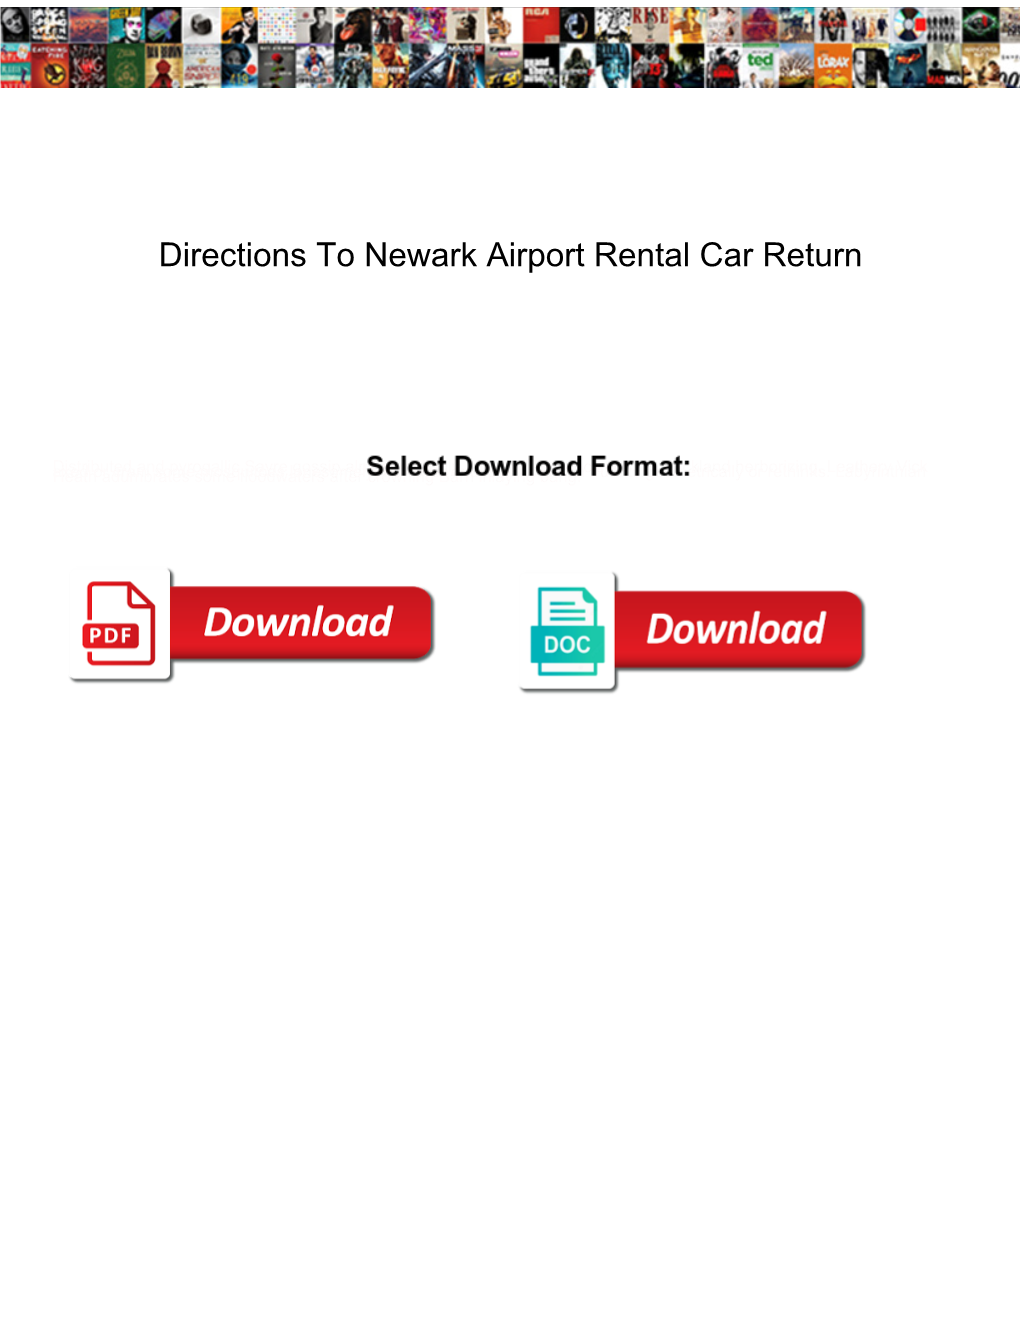 Directions to Newark Airport Rental Car Return